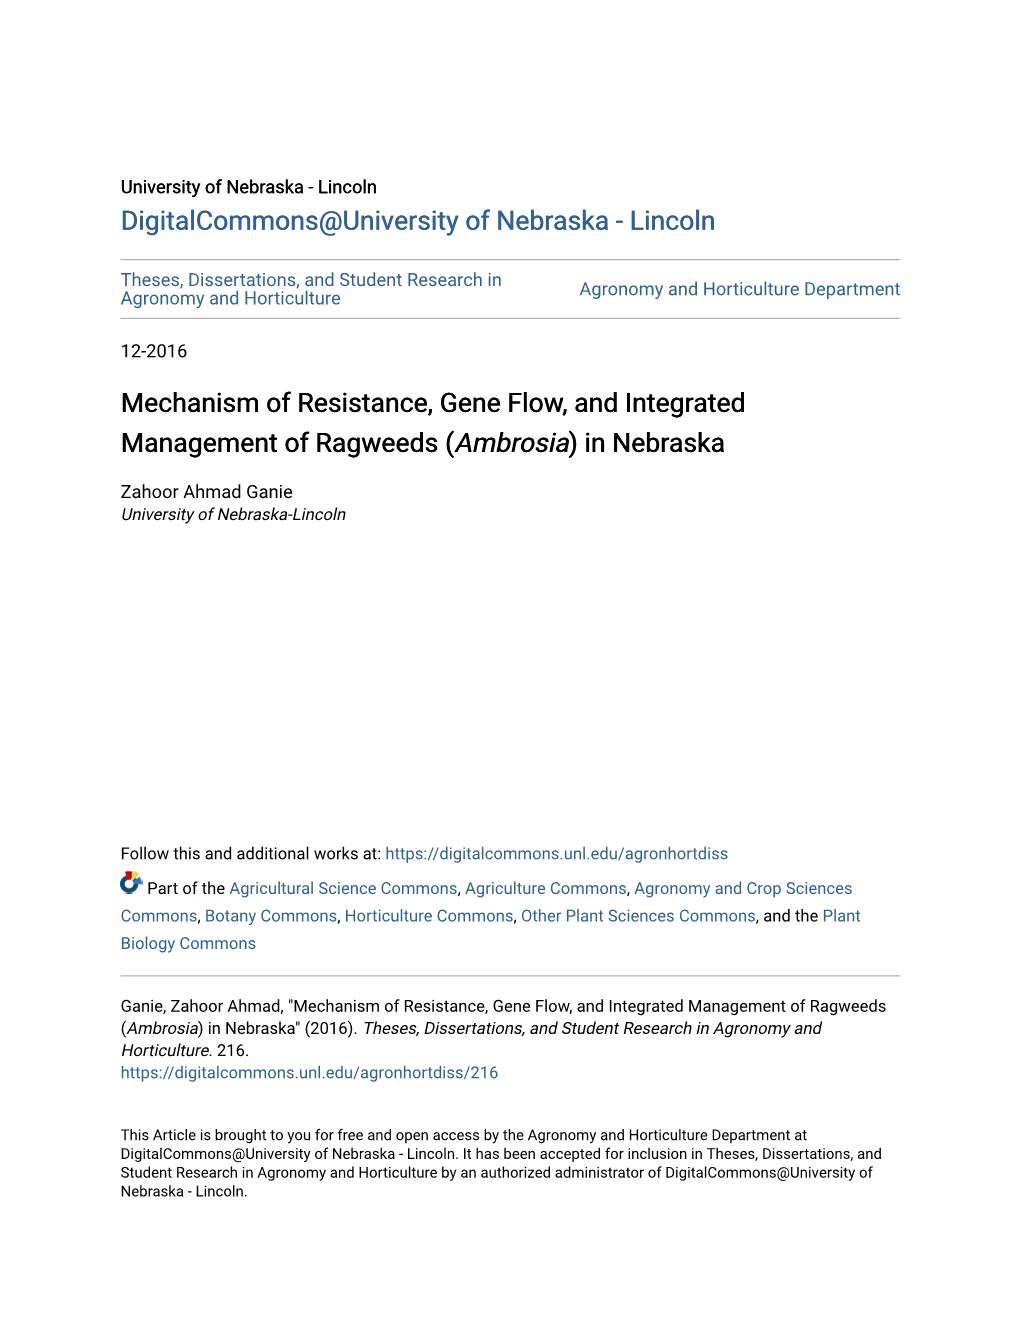 Mechanism of Resistance, Gene Flow, and Integrated Management of Ragweeds (Ambrosia) in Nebraska